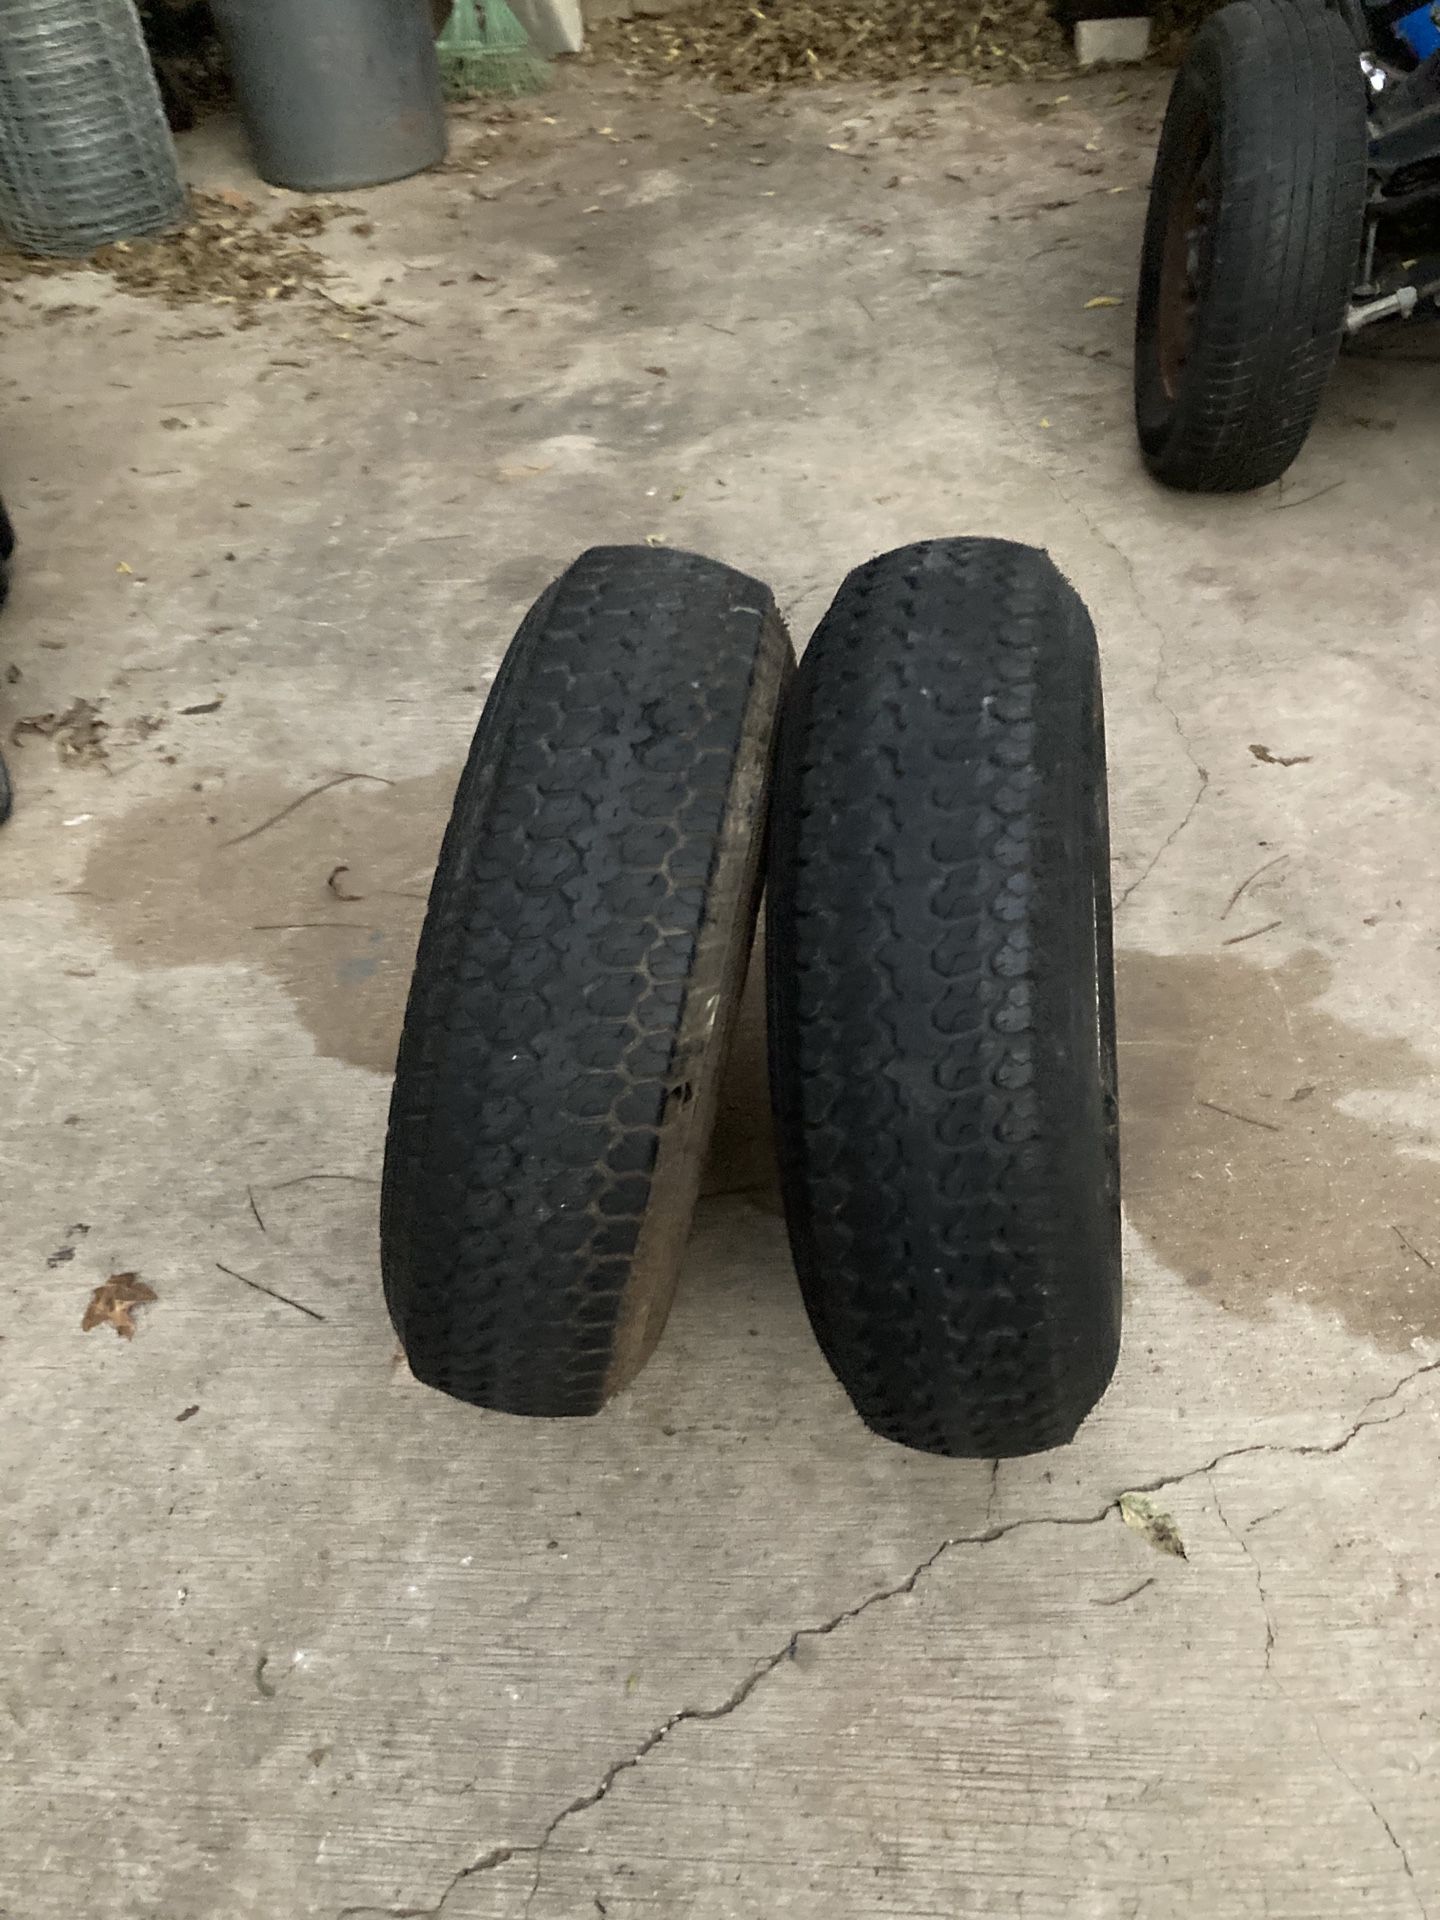 Two tires with wheels for utility trailer llantas para traila